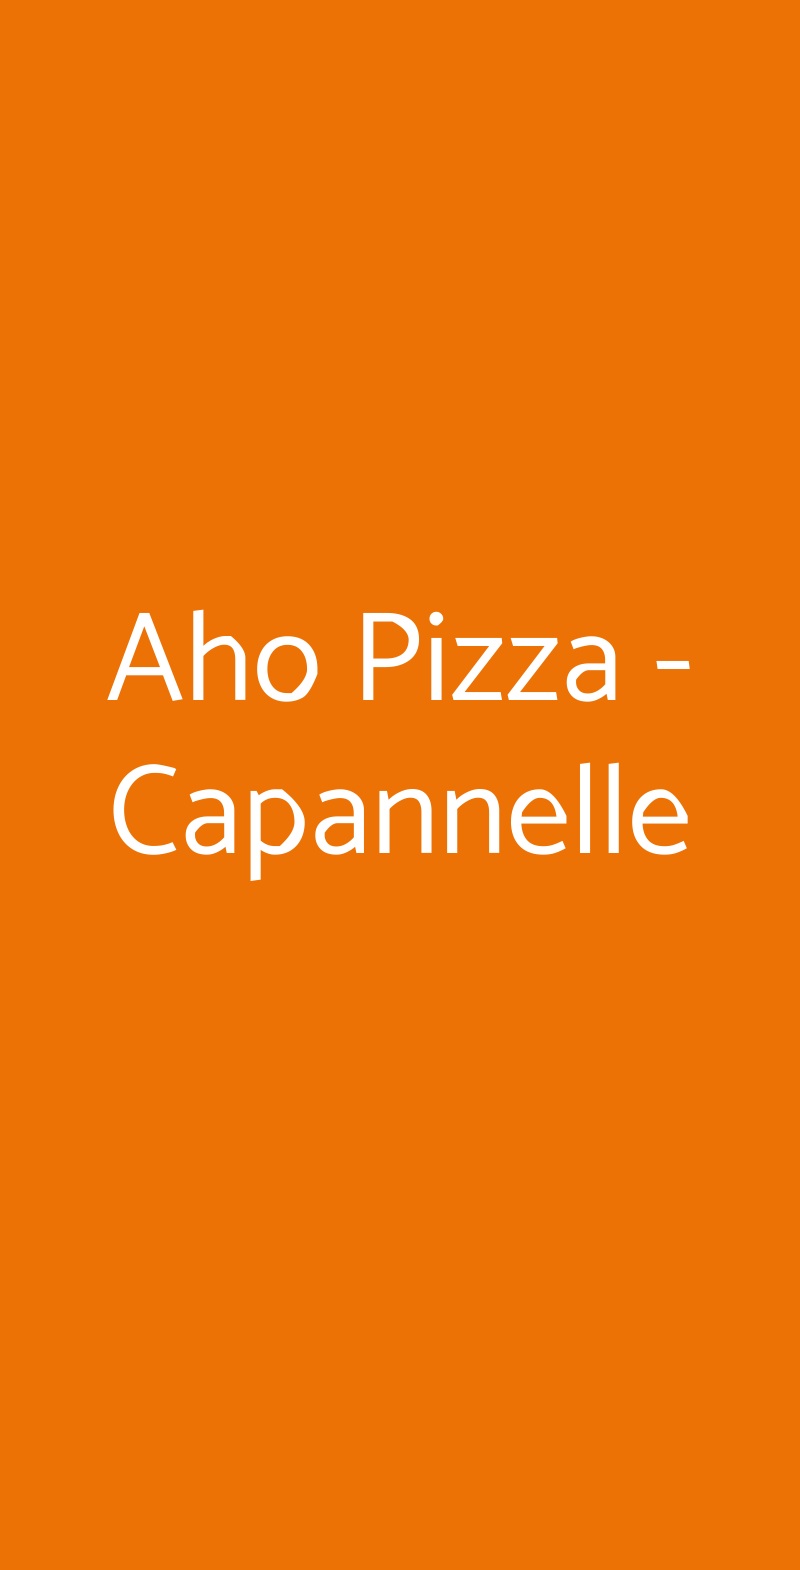 Aho Pizza - Capannelle Roma menù 1 pagina